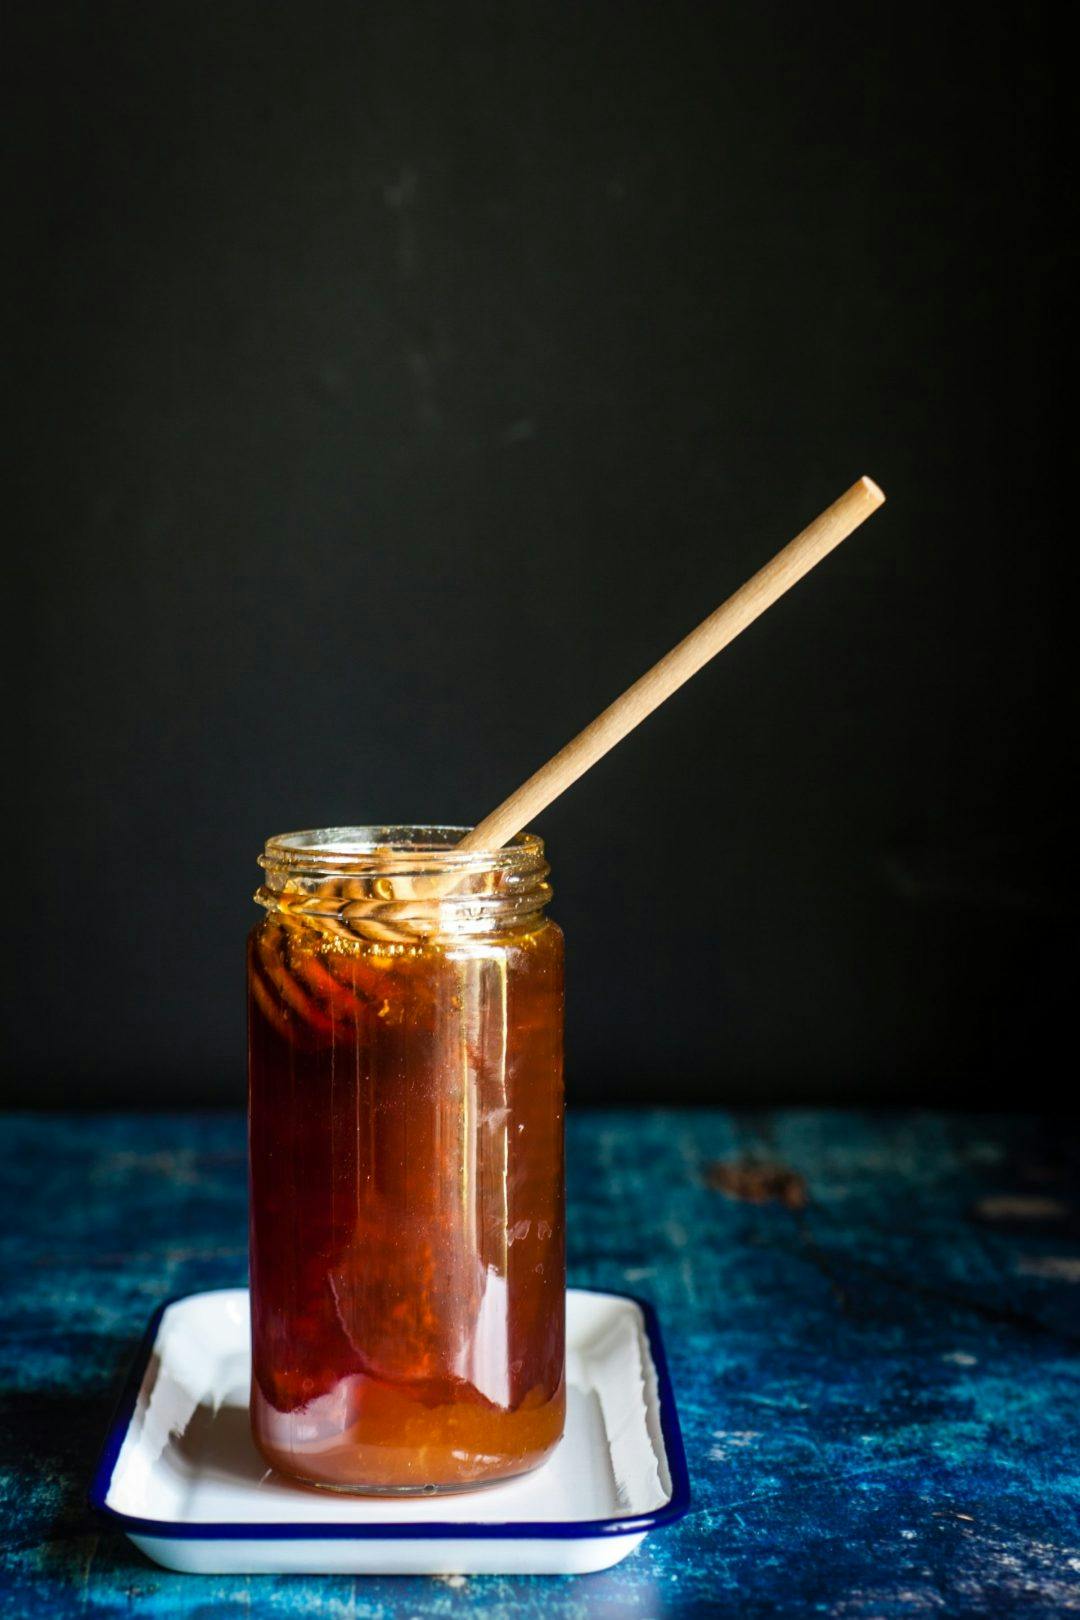 A jar of honey from Bismarck